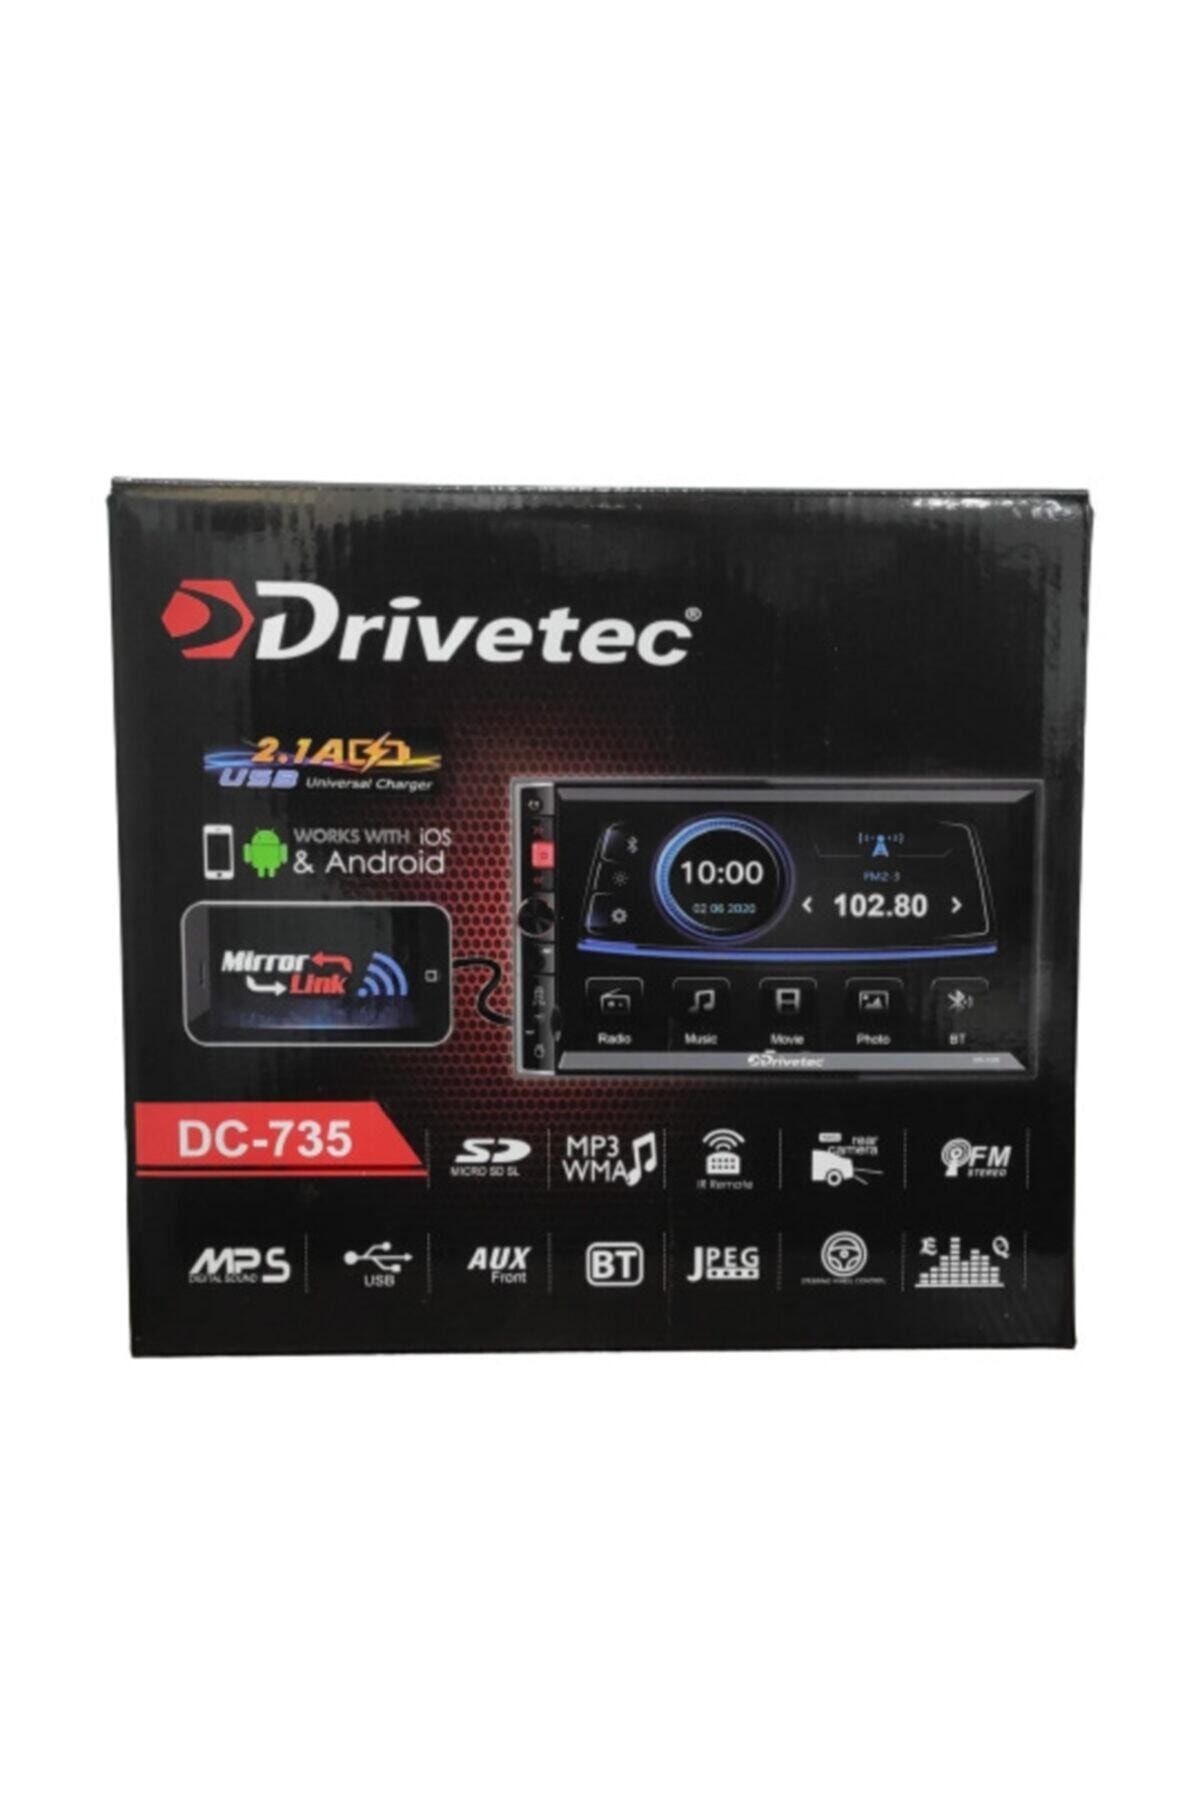 Drivetec Dc-735 Double Oto Teyp Bluetooth Çift Usb Sd Kart Mirrorlink 2.1a Güçlü Şarj Dc-735 7 Inc